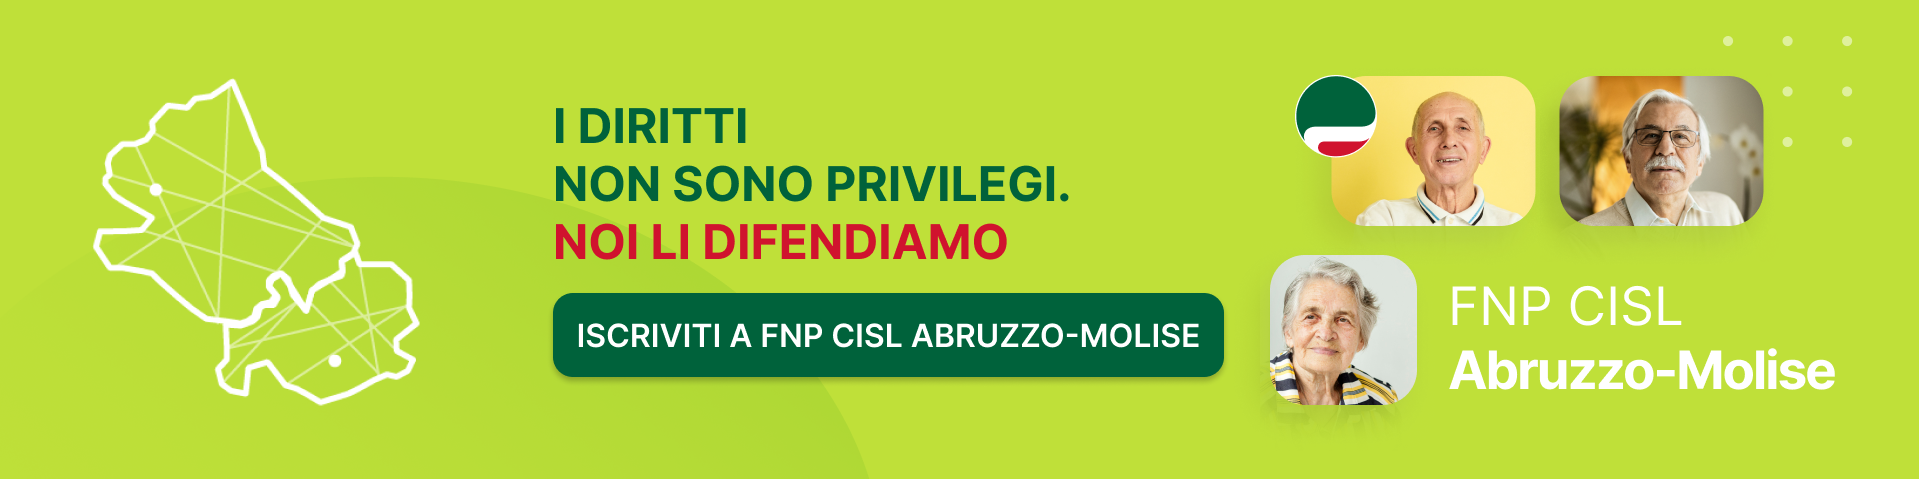 FNP CISL Abruzzo - Molise - I diritti non sono privilegi. NOI LI DIFENDIAMO